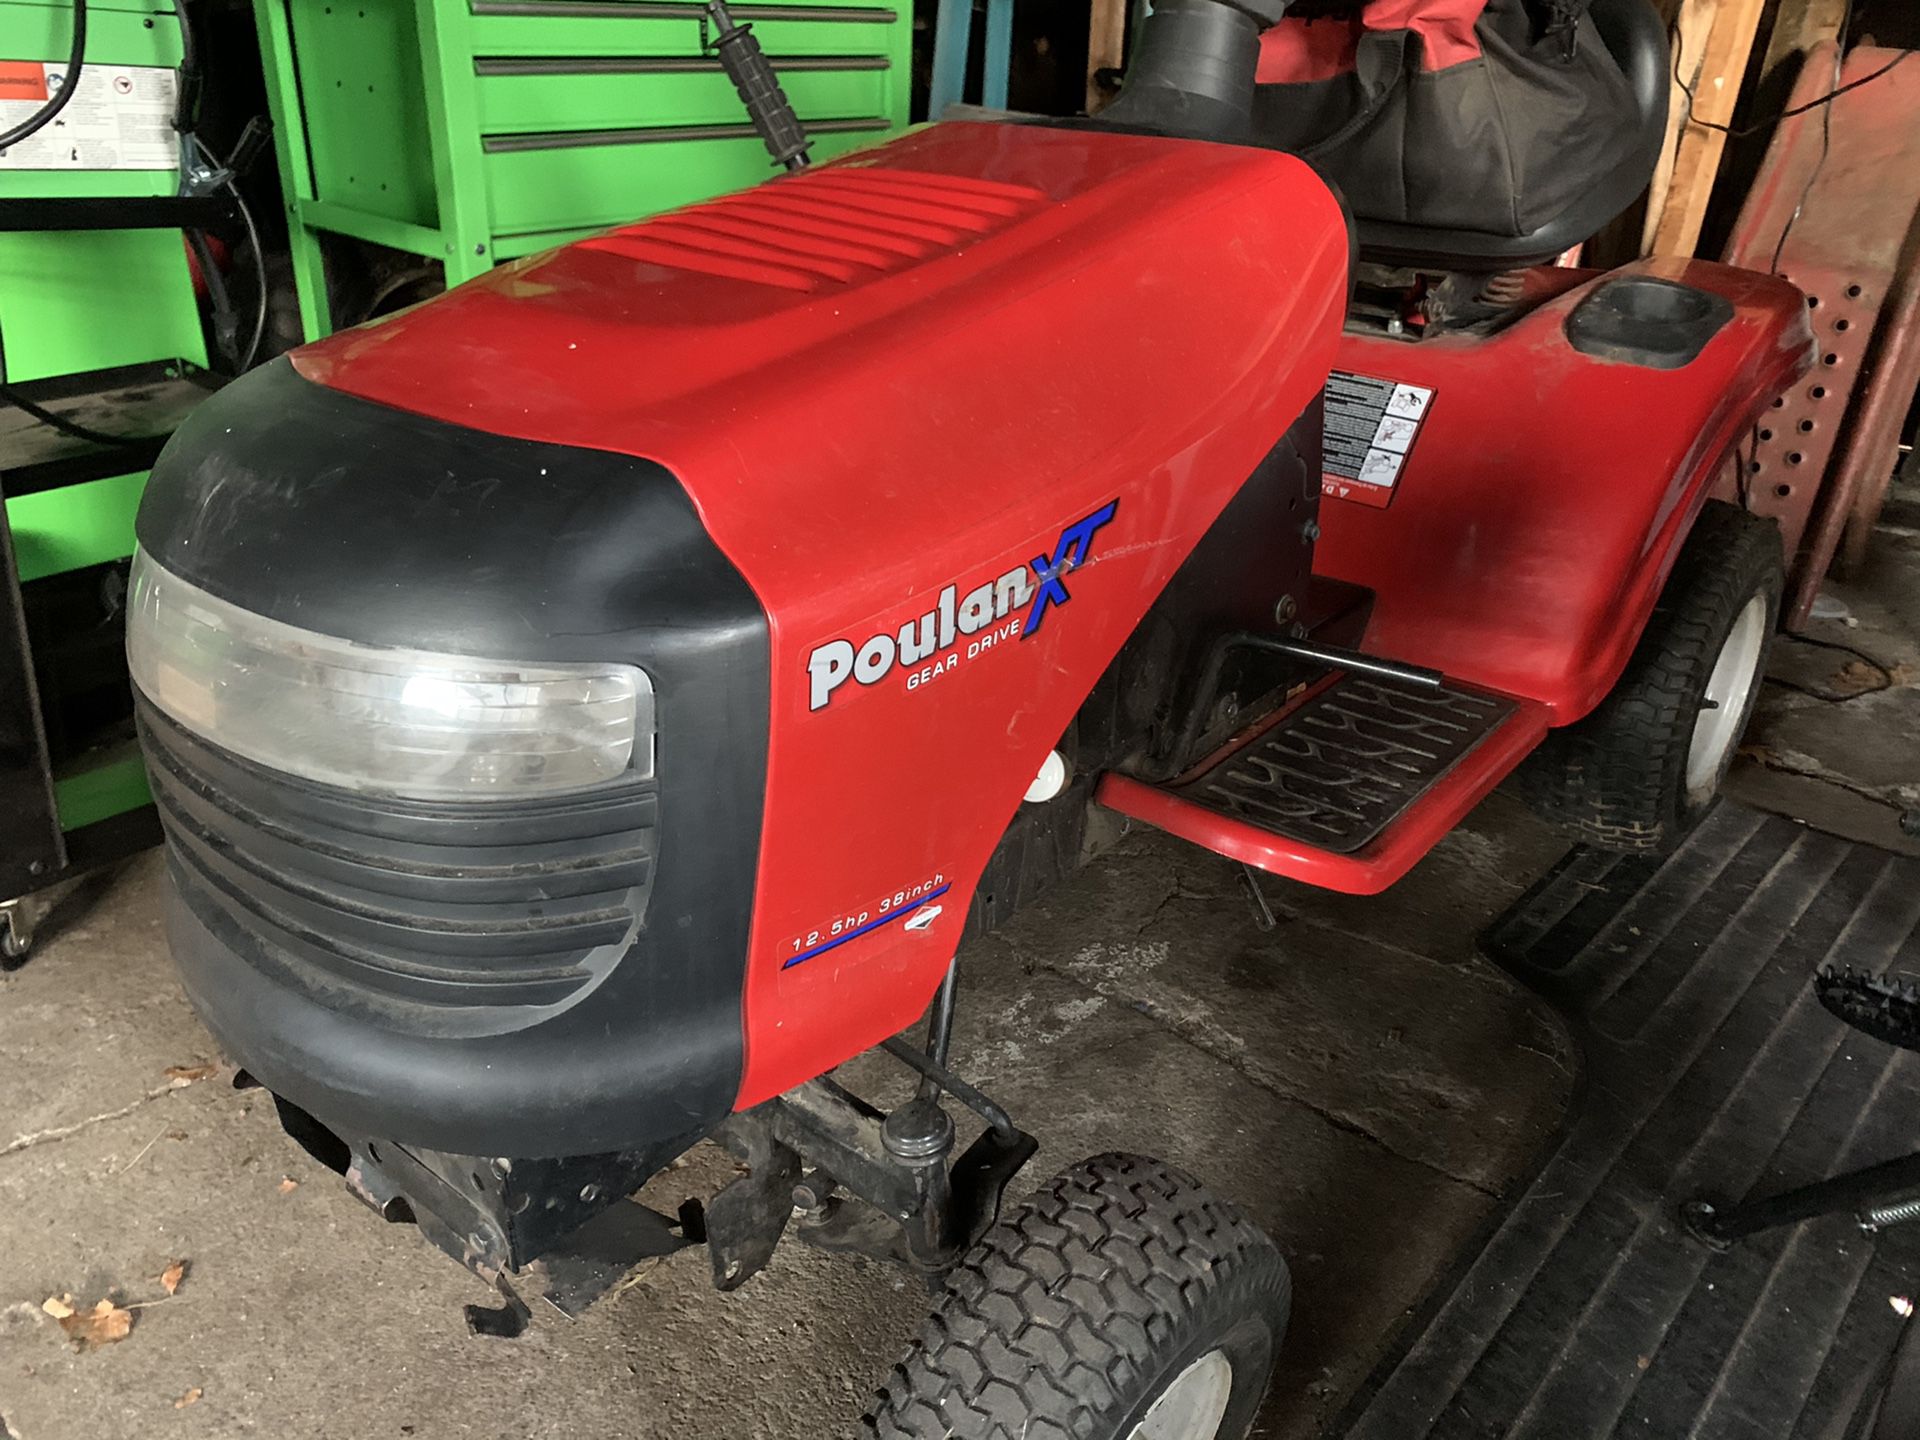 Poulan XT yard tractor